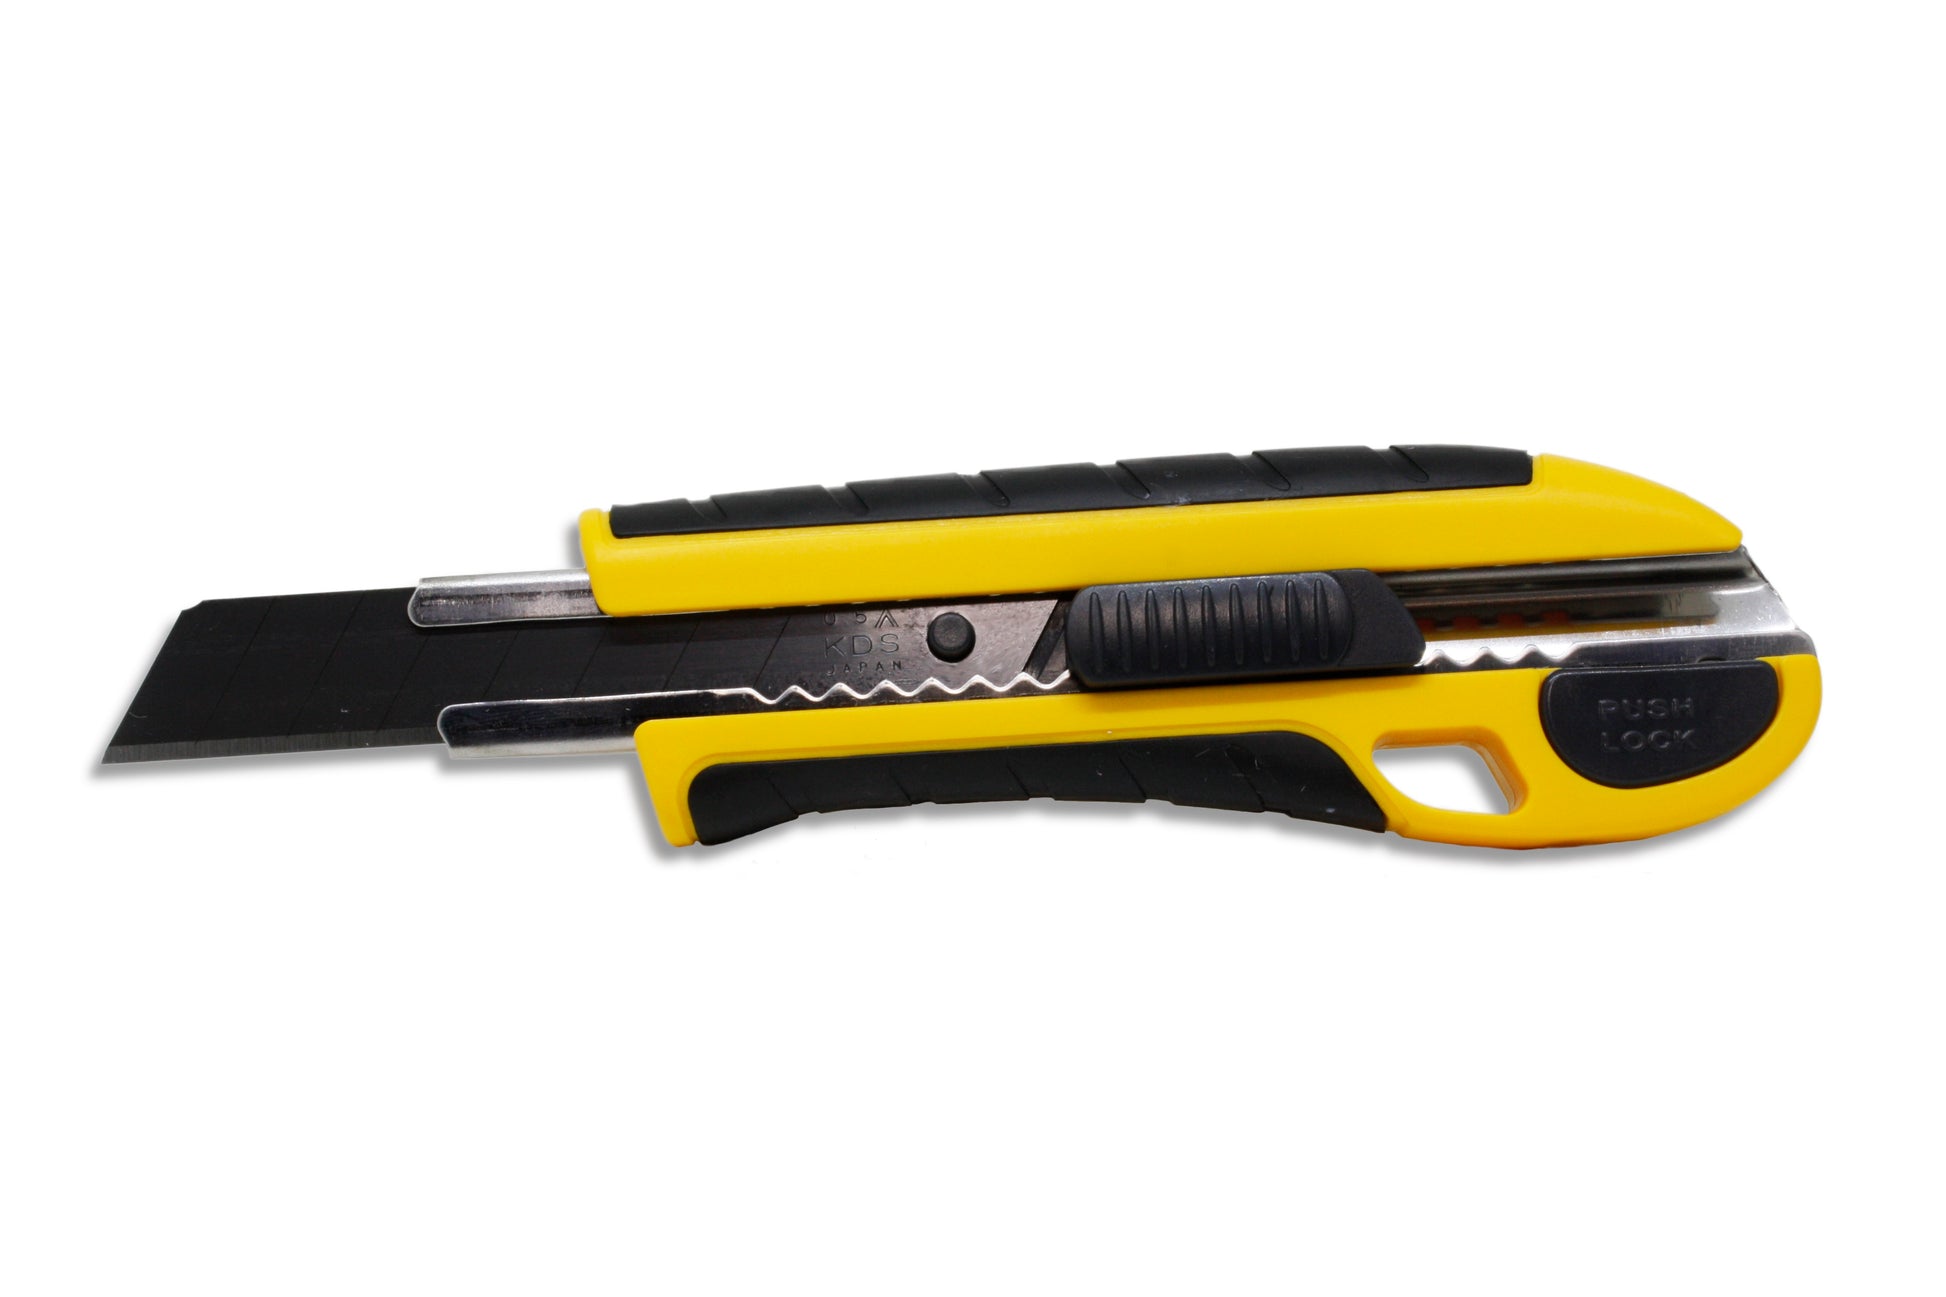 Tradegear Online's KDS 18mm Knife with blade extended demonstrating EVO Black Blade